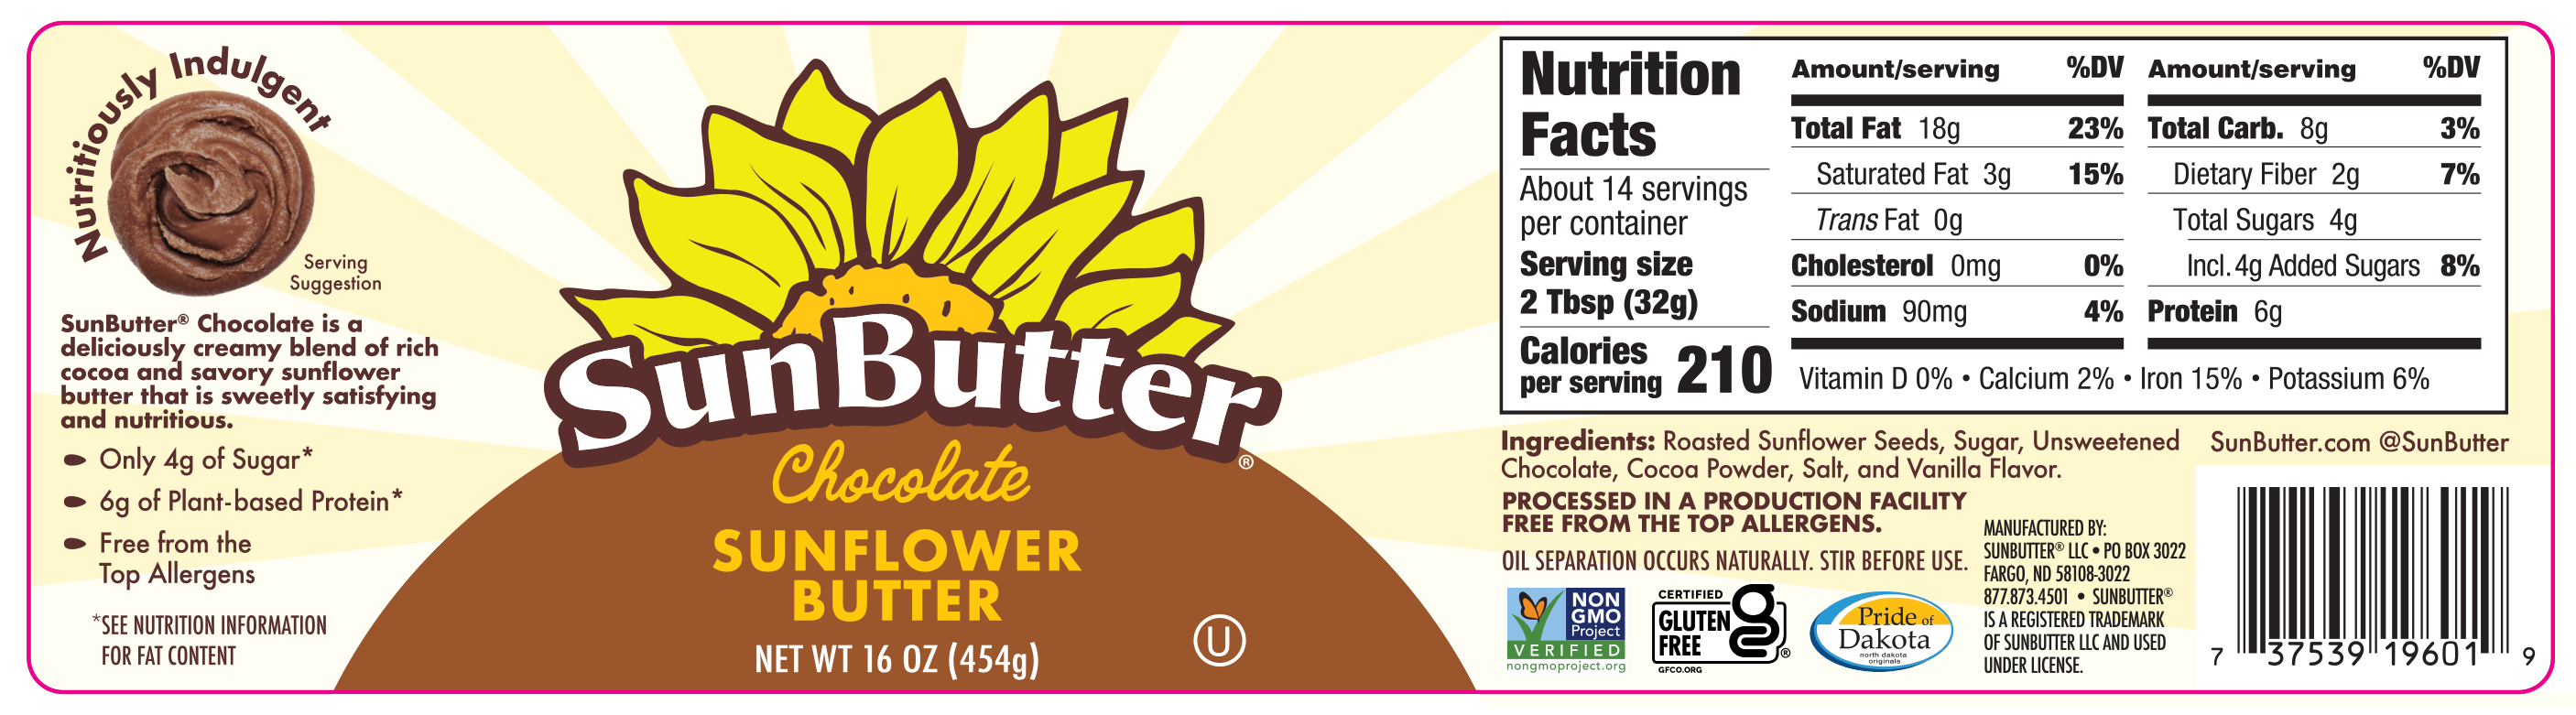 Sunbutter Chocolate Nutrition